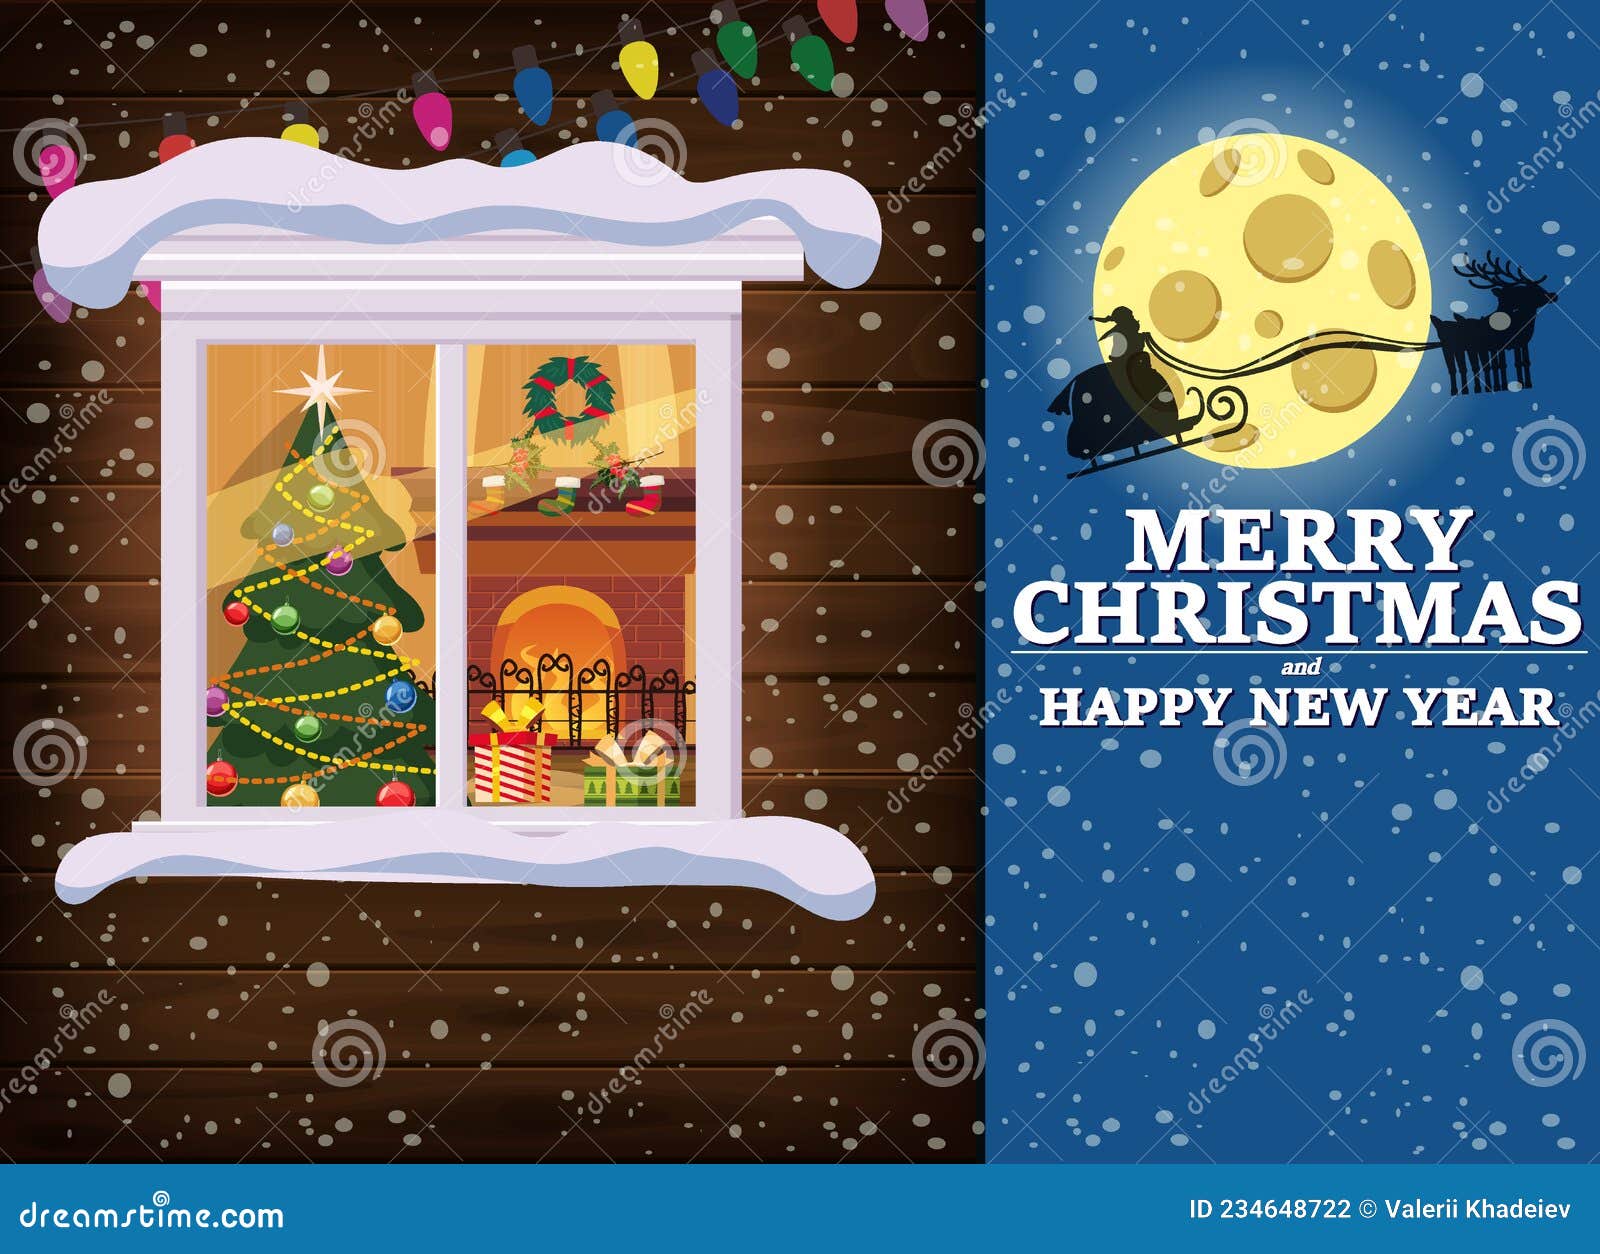 merry chrismas, window, night moon, santa with sleigh, decoraions garland retro, living room christmas tree. xmas and